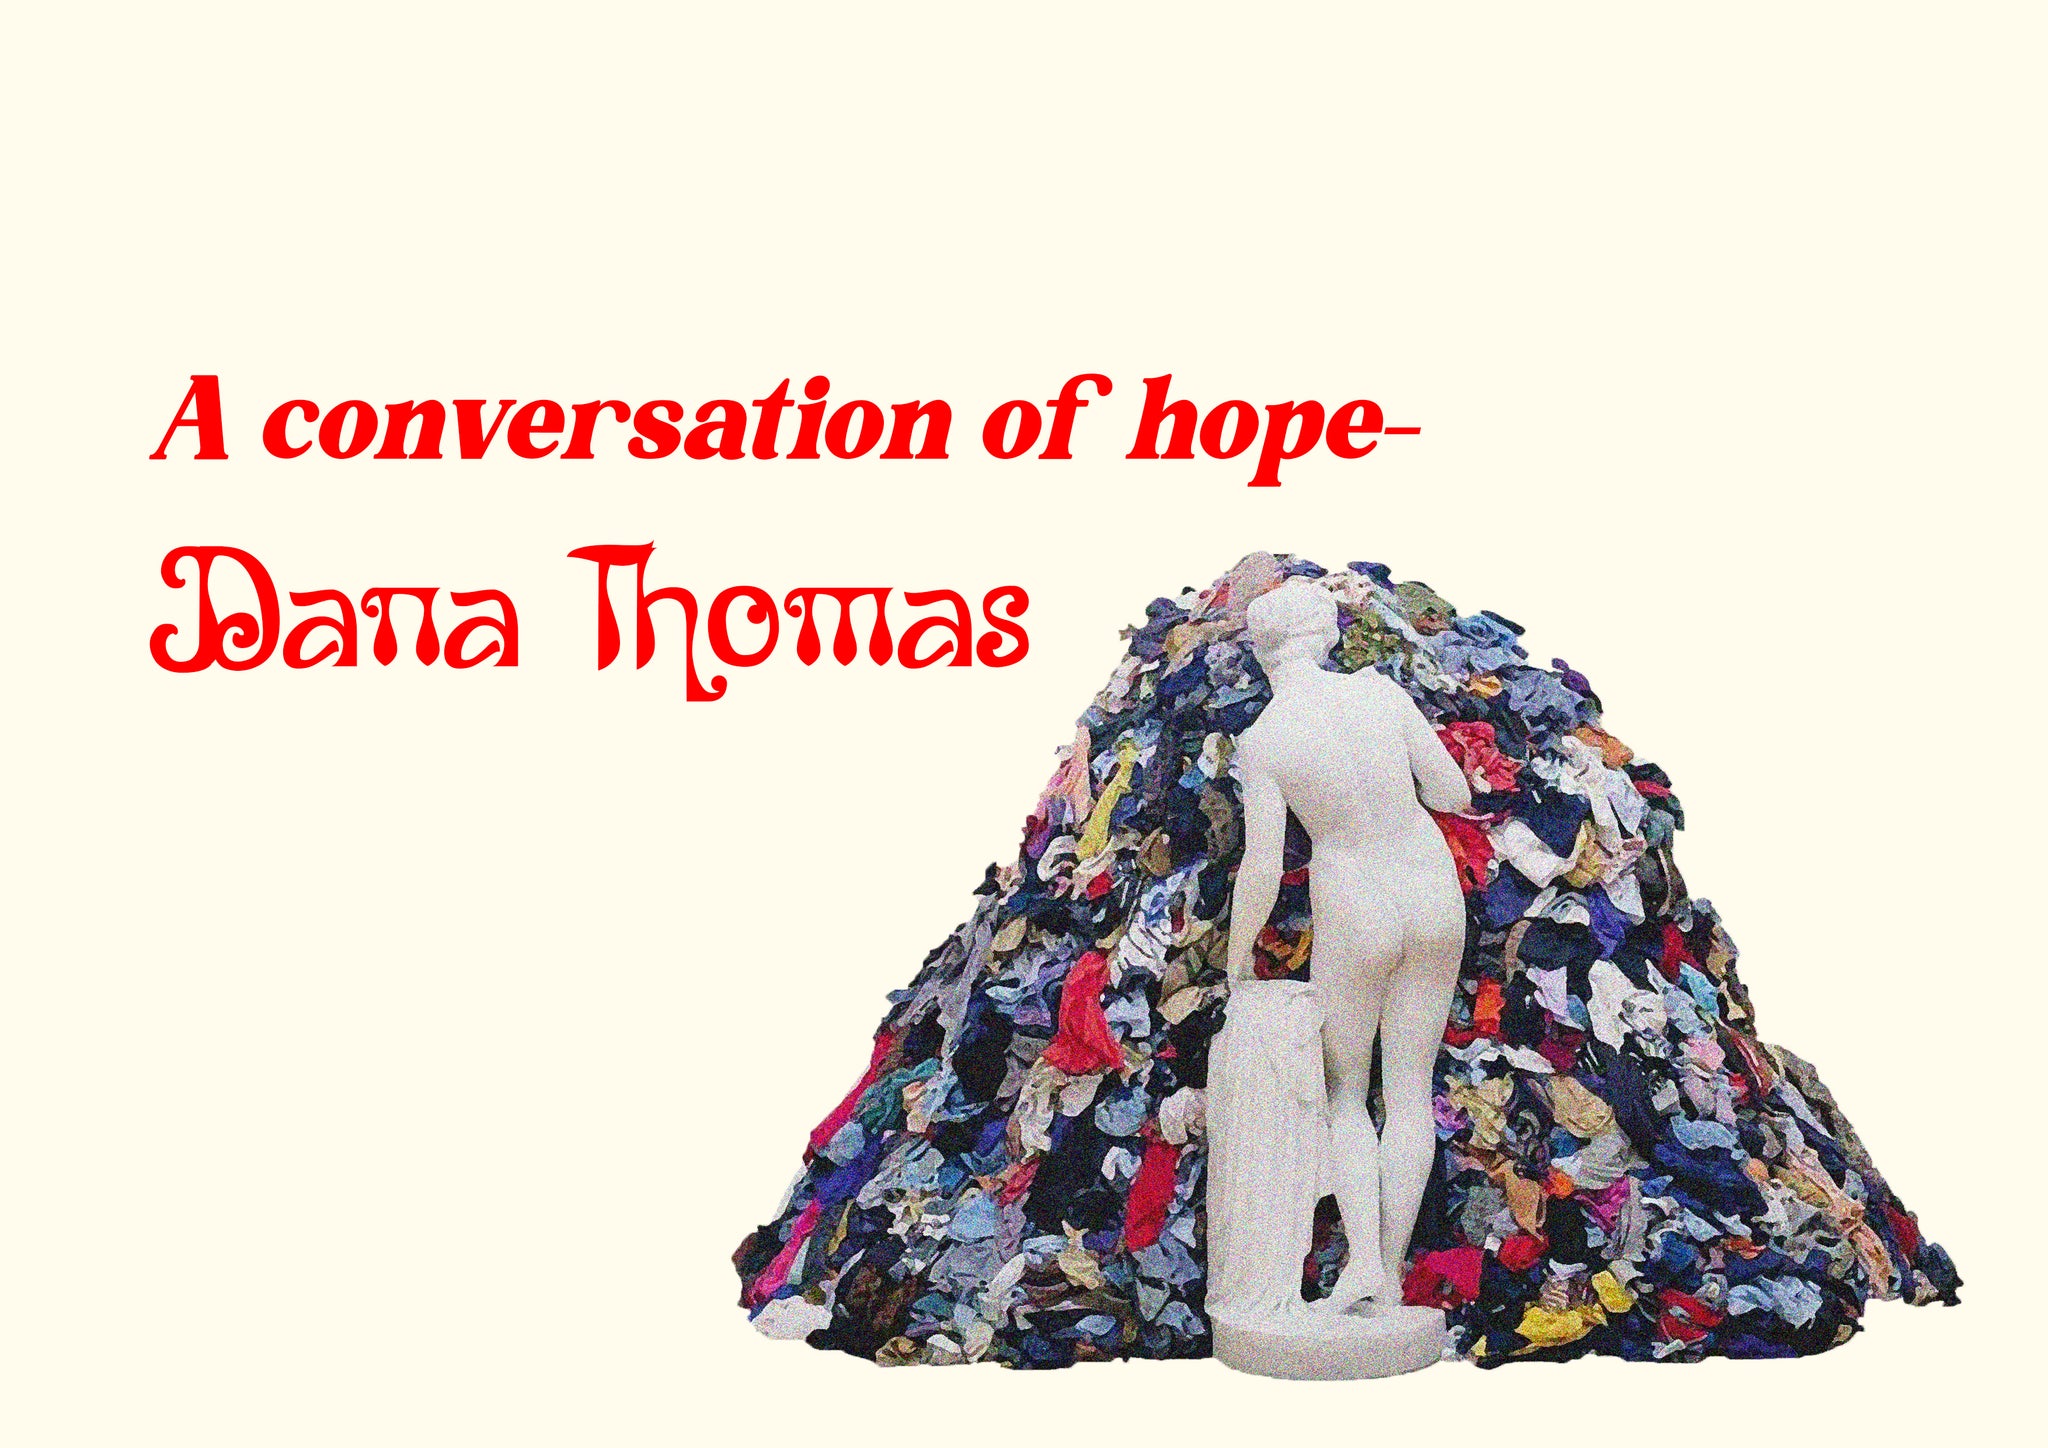 A conversation of hope with Dana Thomas